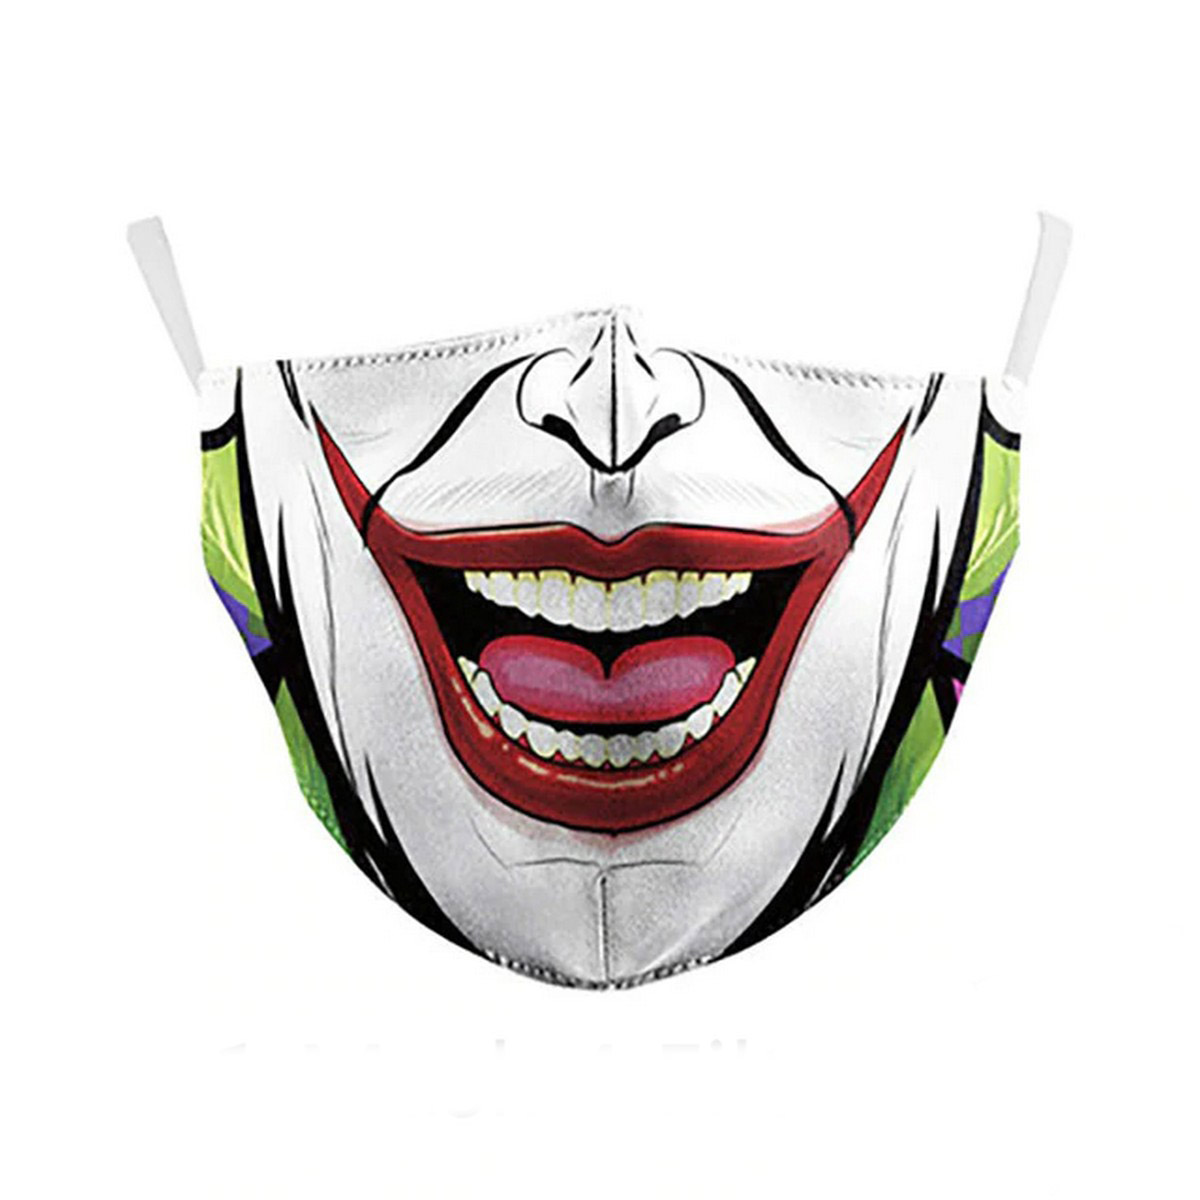 Masker wajah Joker